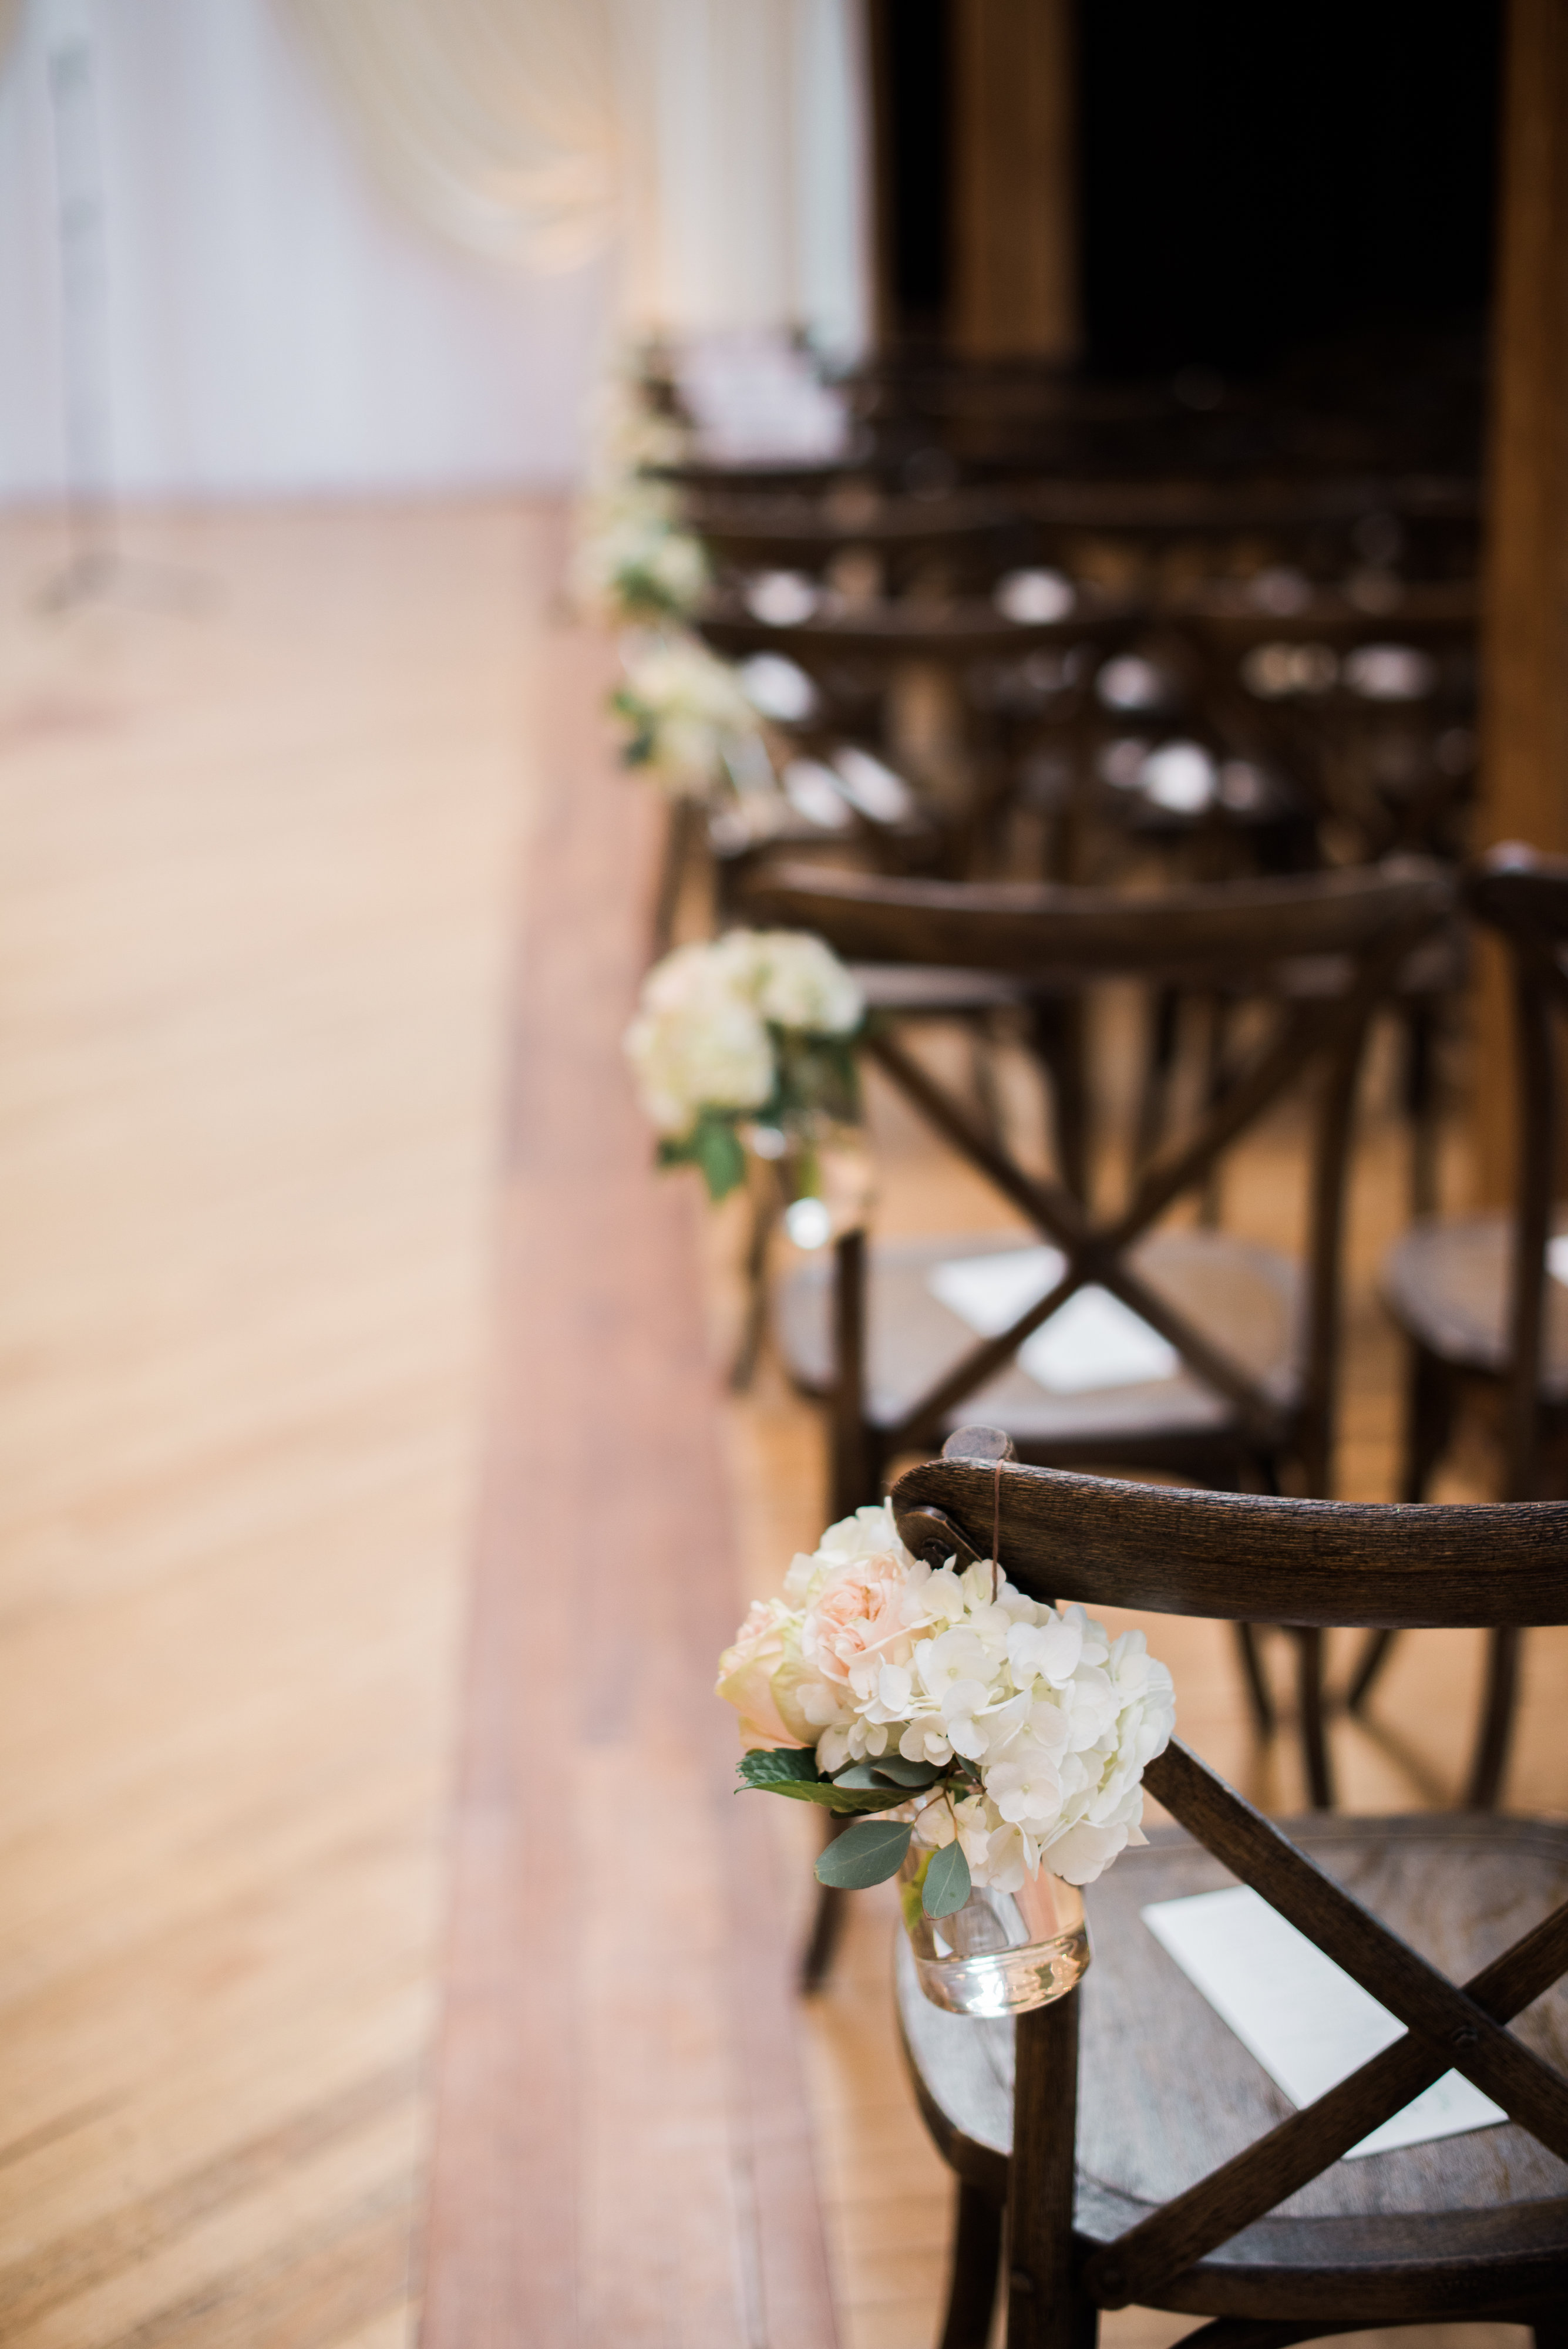 Wedding ceremony aisle flowers at Bridgeport Art Center Skyline Loft in Chicago.